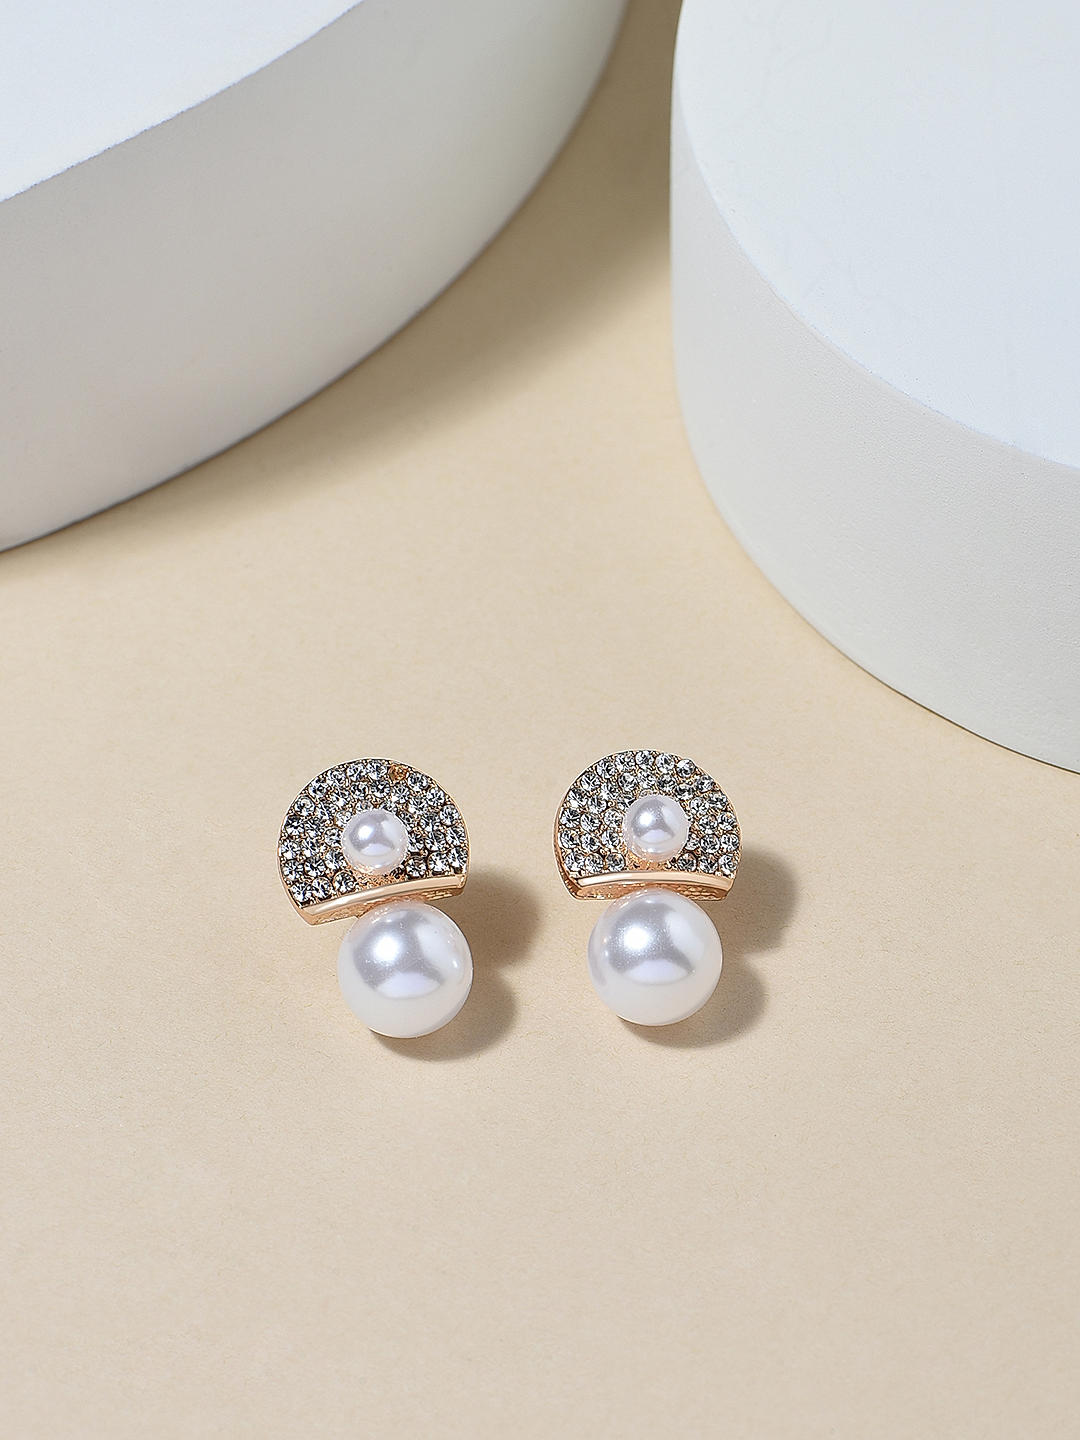 Top White Diamond Stud Earrings - The Jewelry Exchange